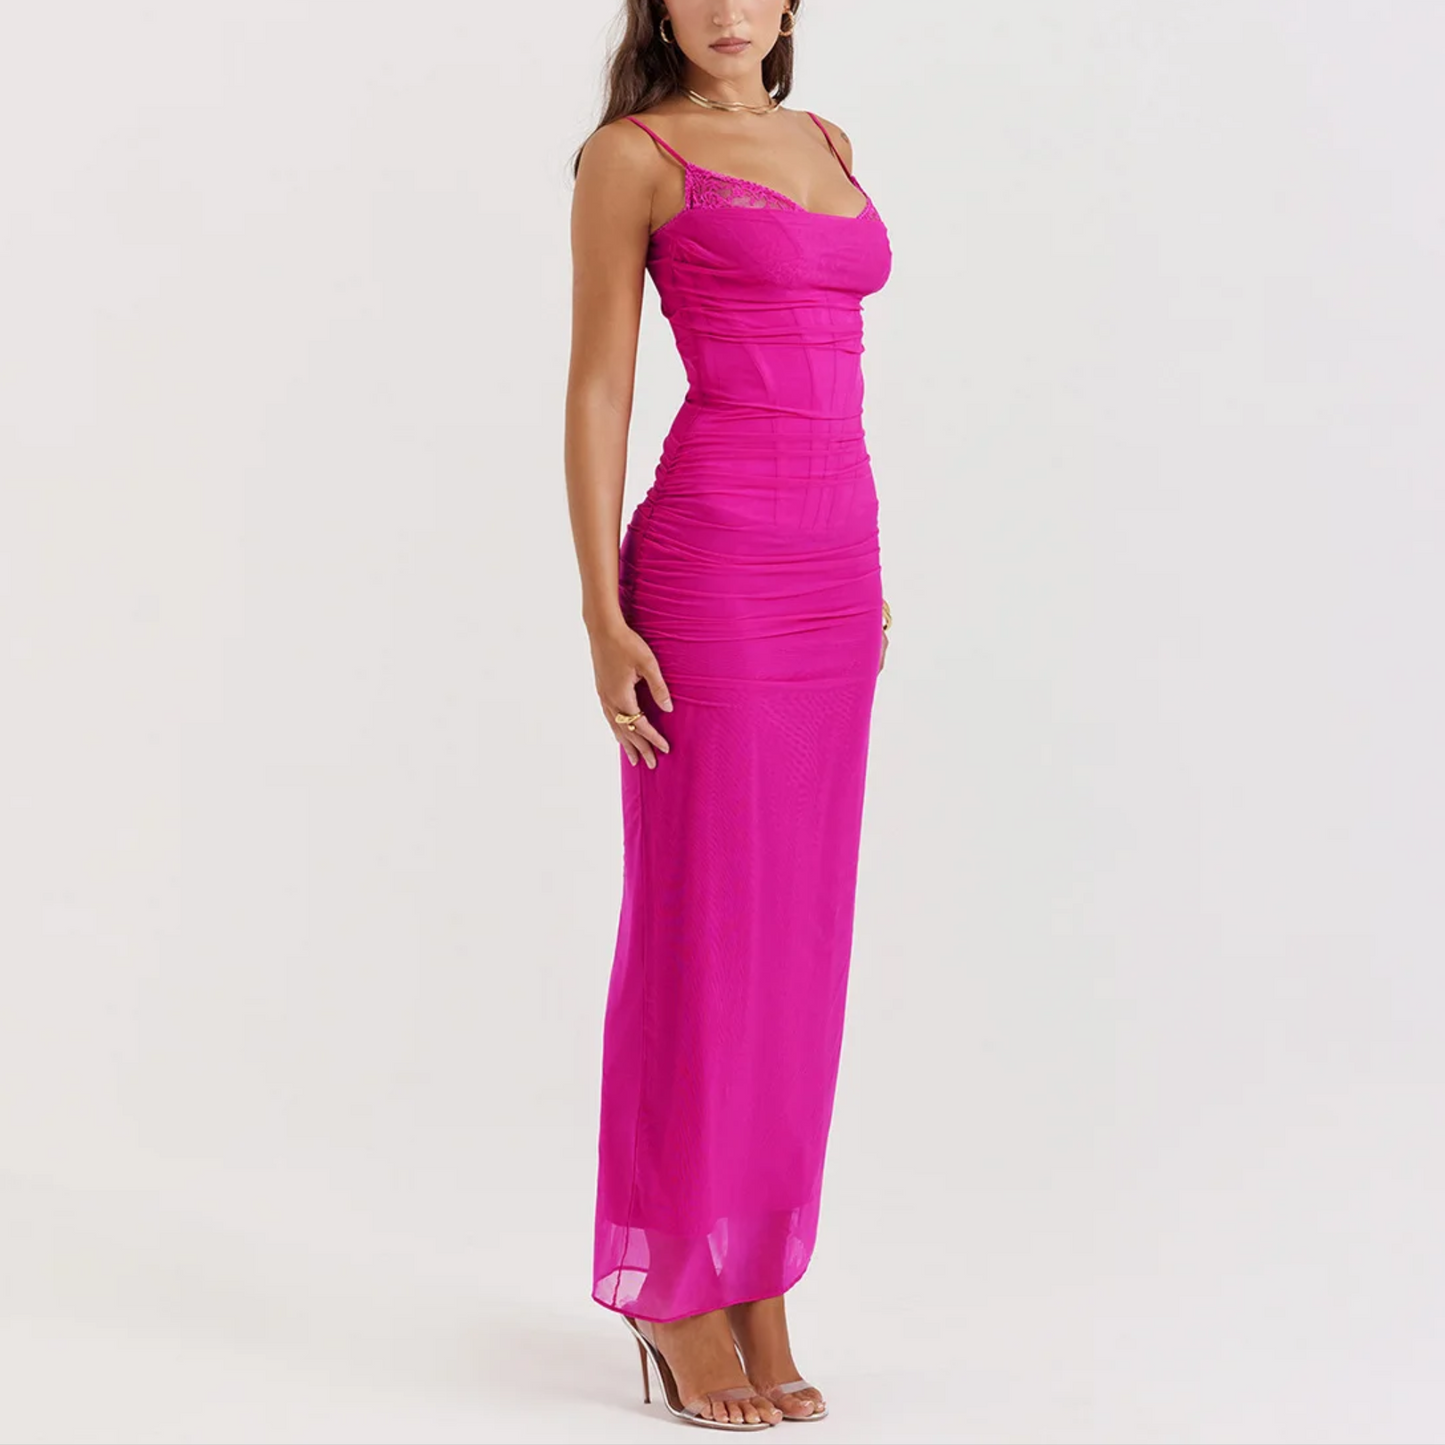 Maritza - Pink Mesh Corset Bodycon Dress